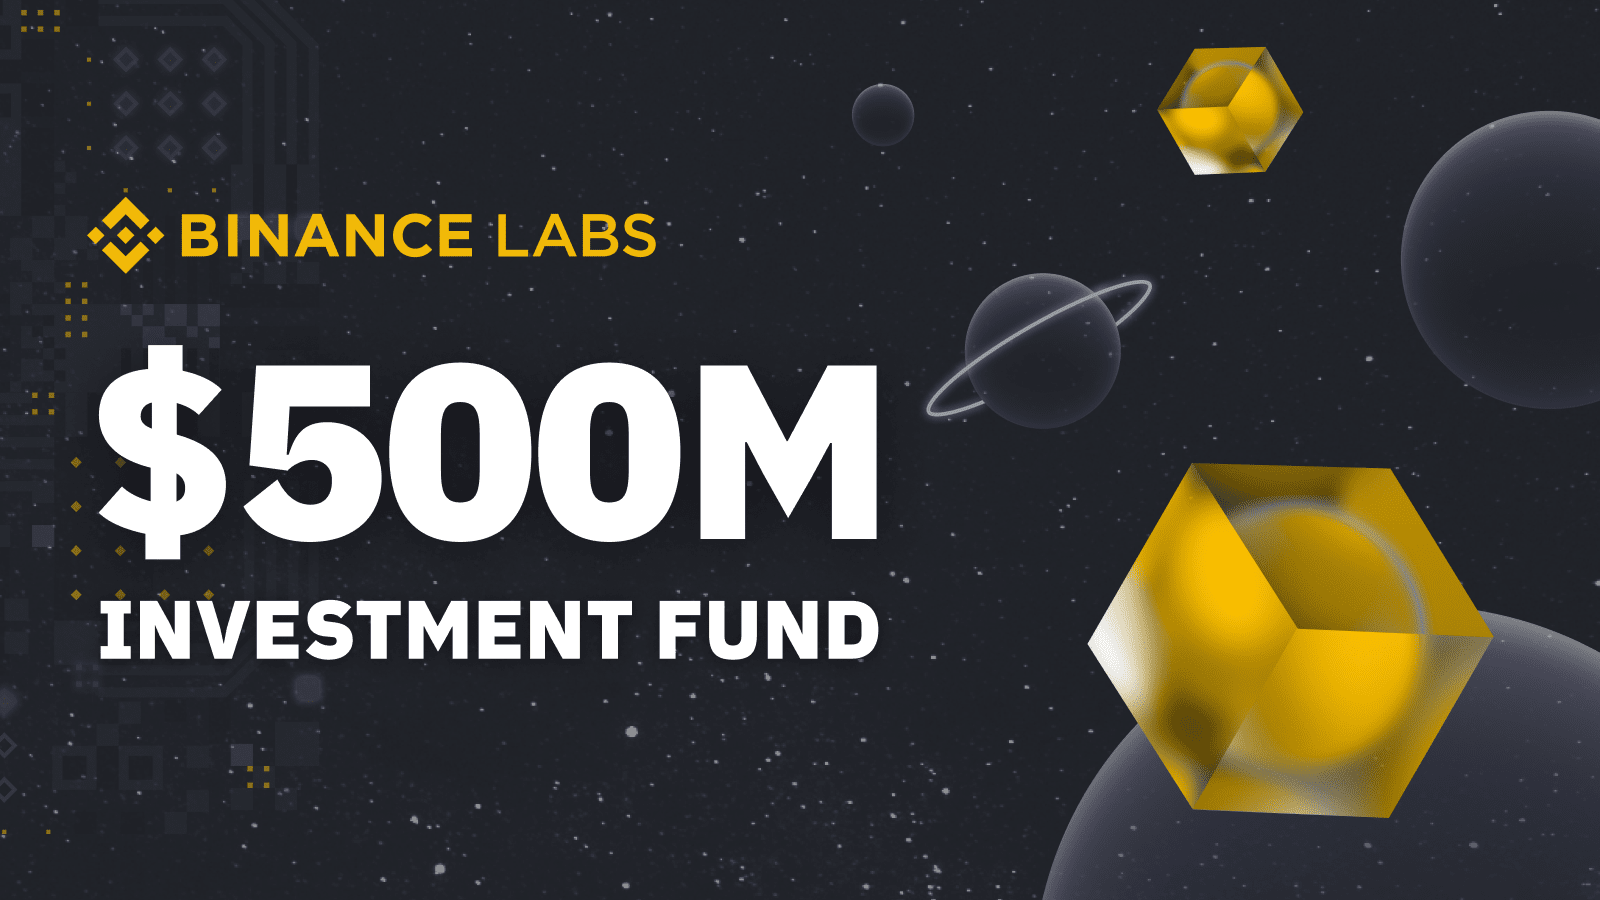 binance labs investment fund 500m